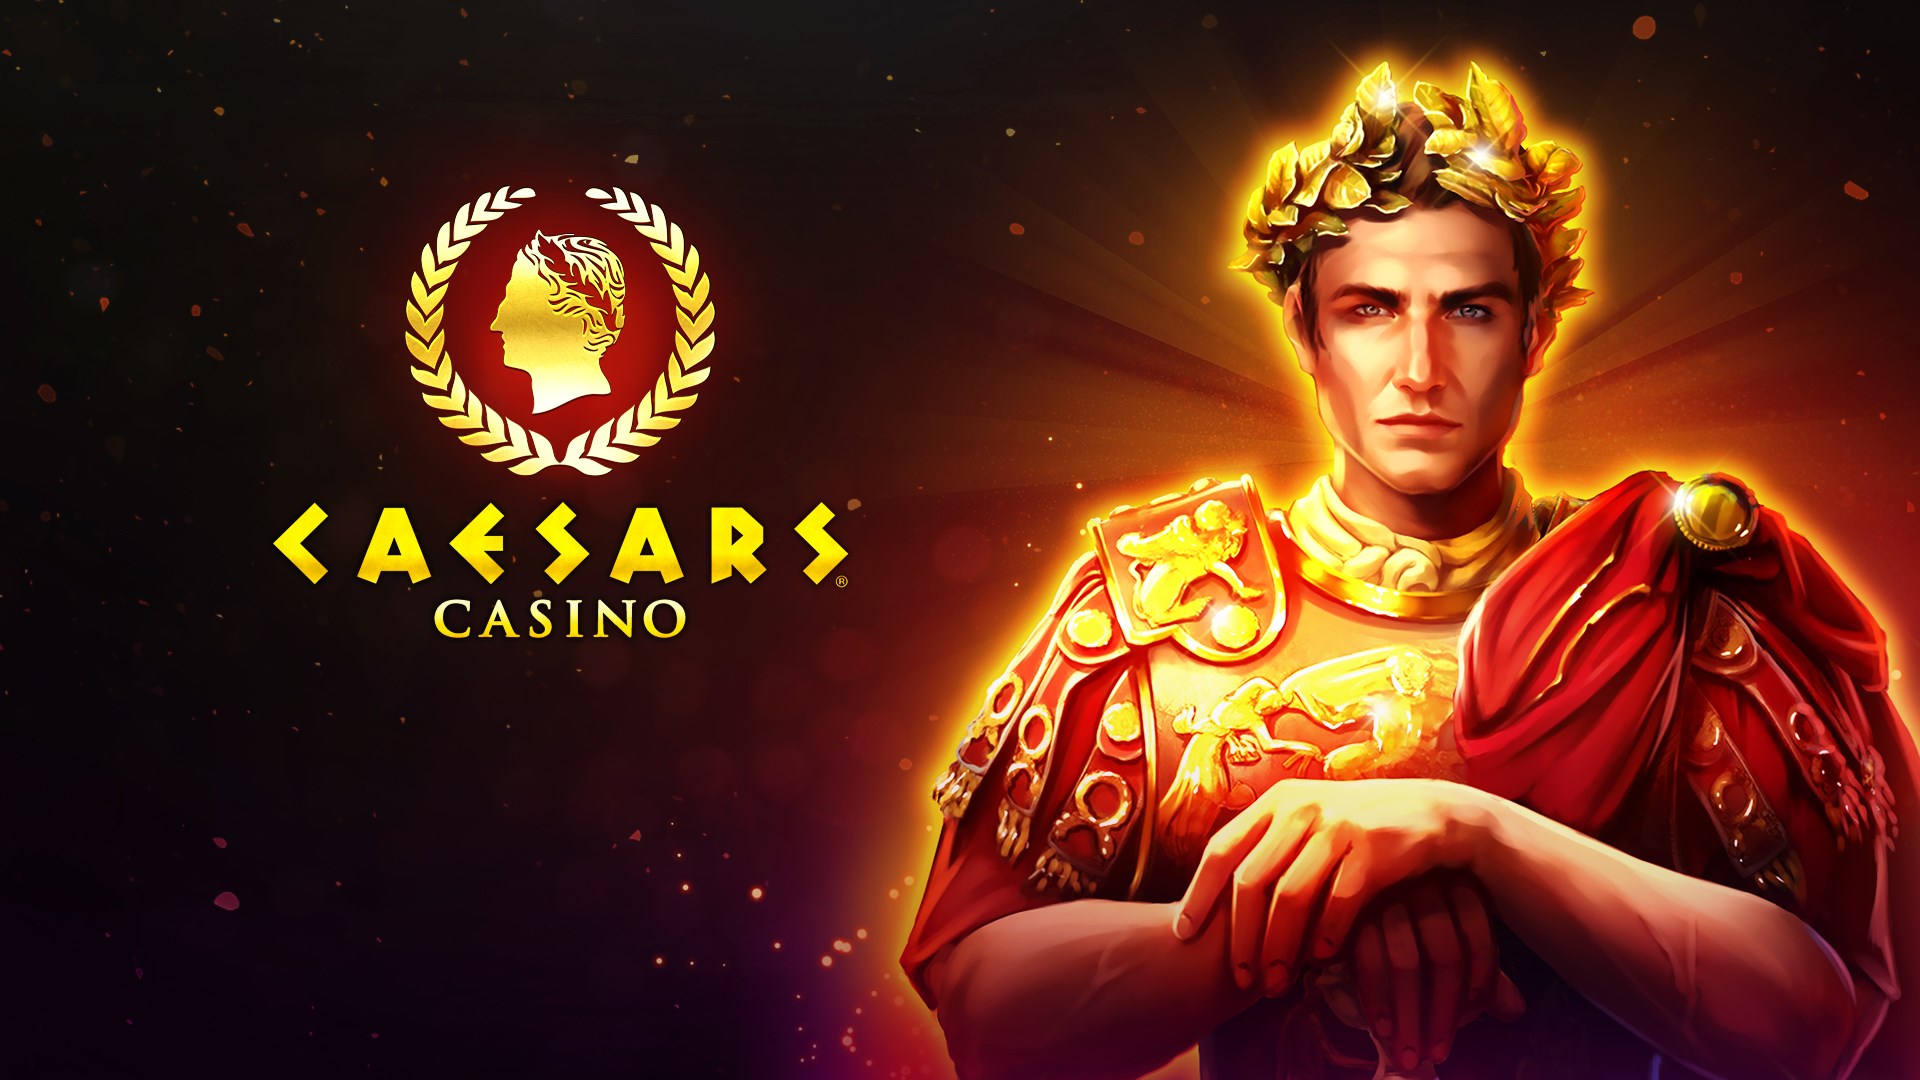 Caesar slots casino free coins